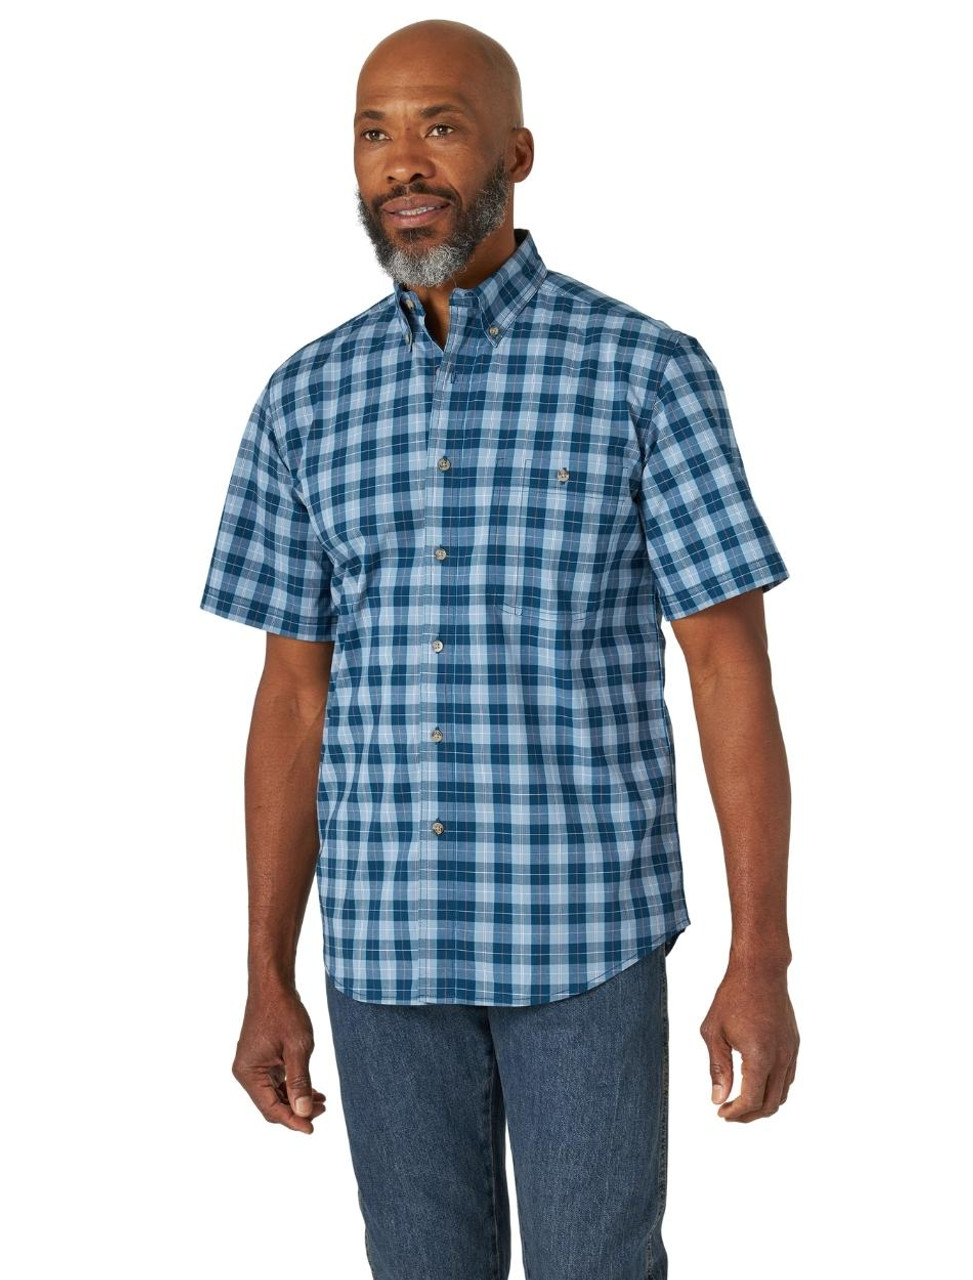 plaid shirts how to wear